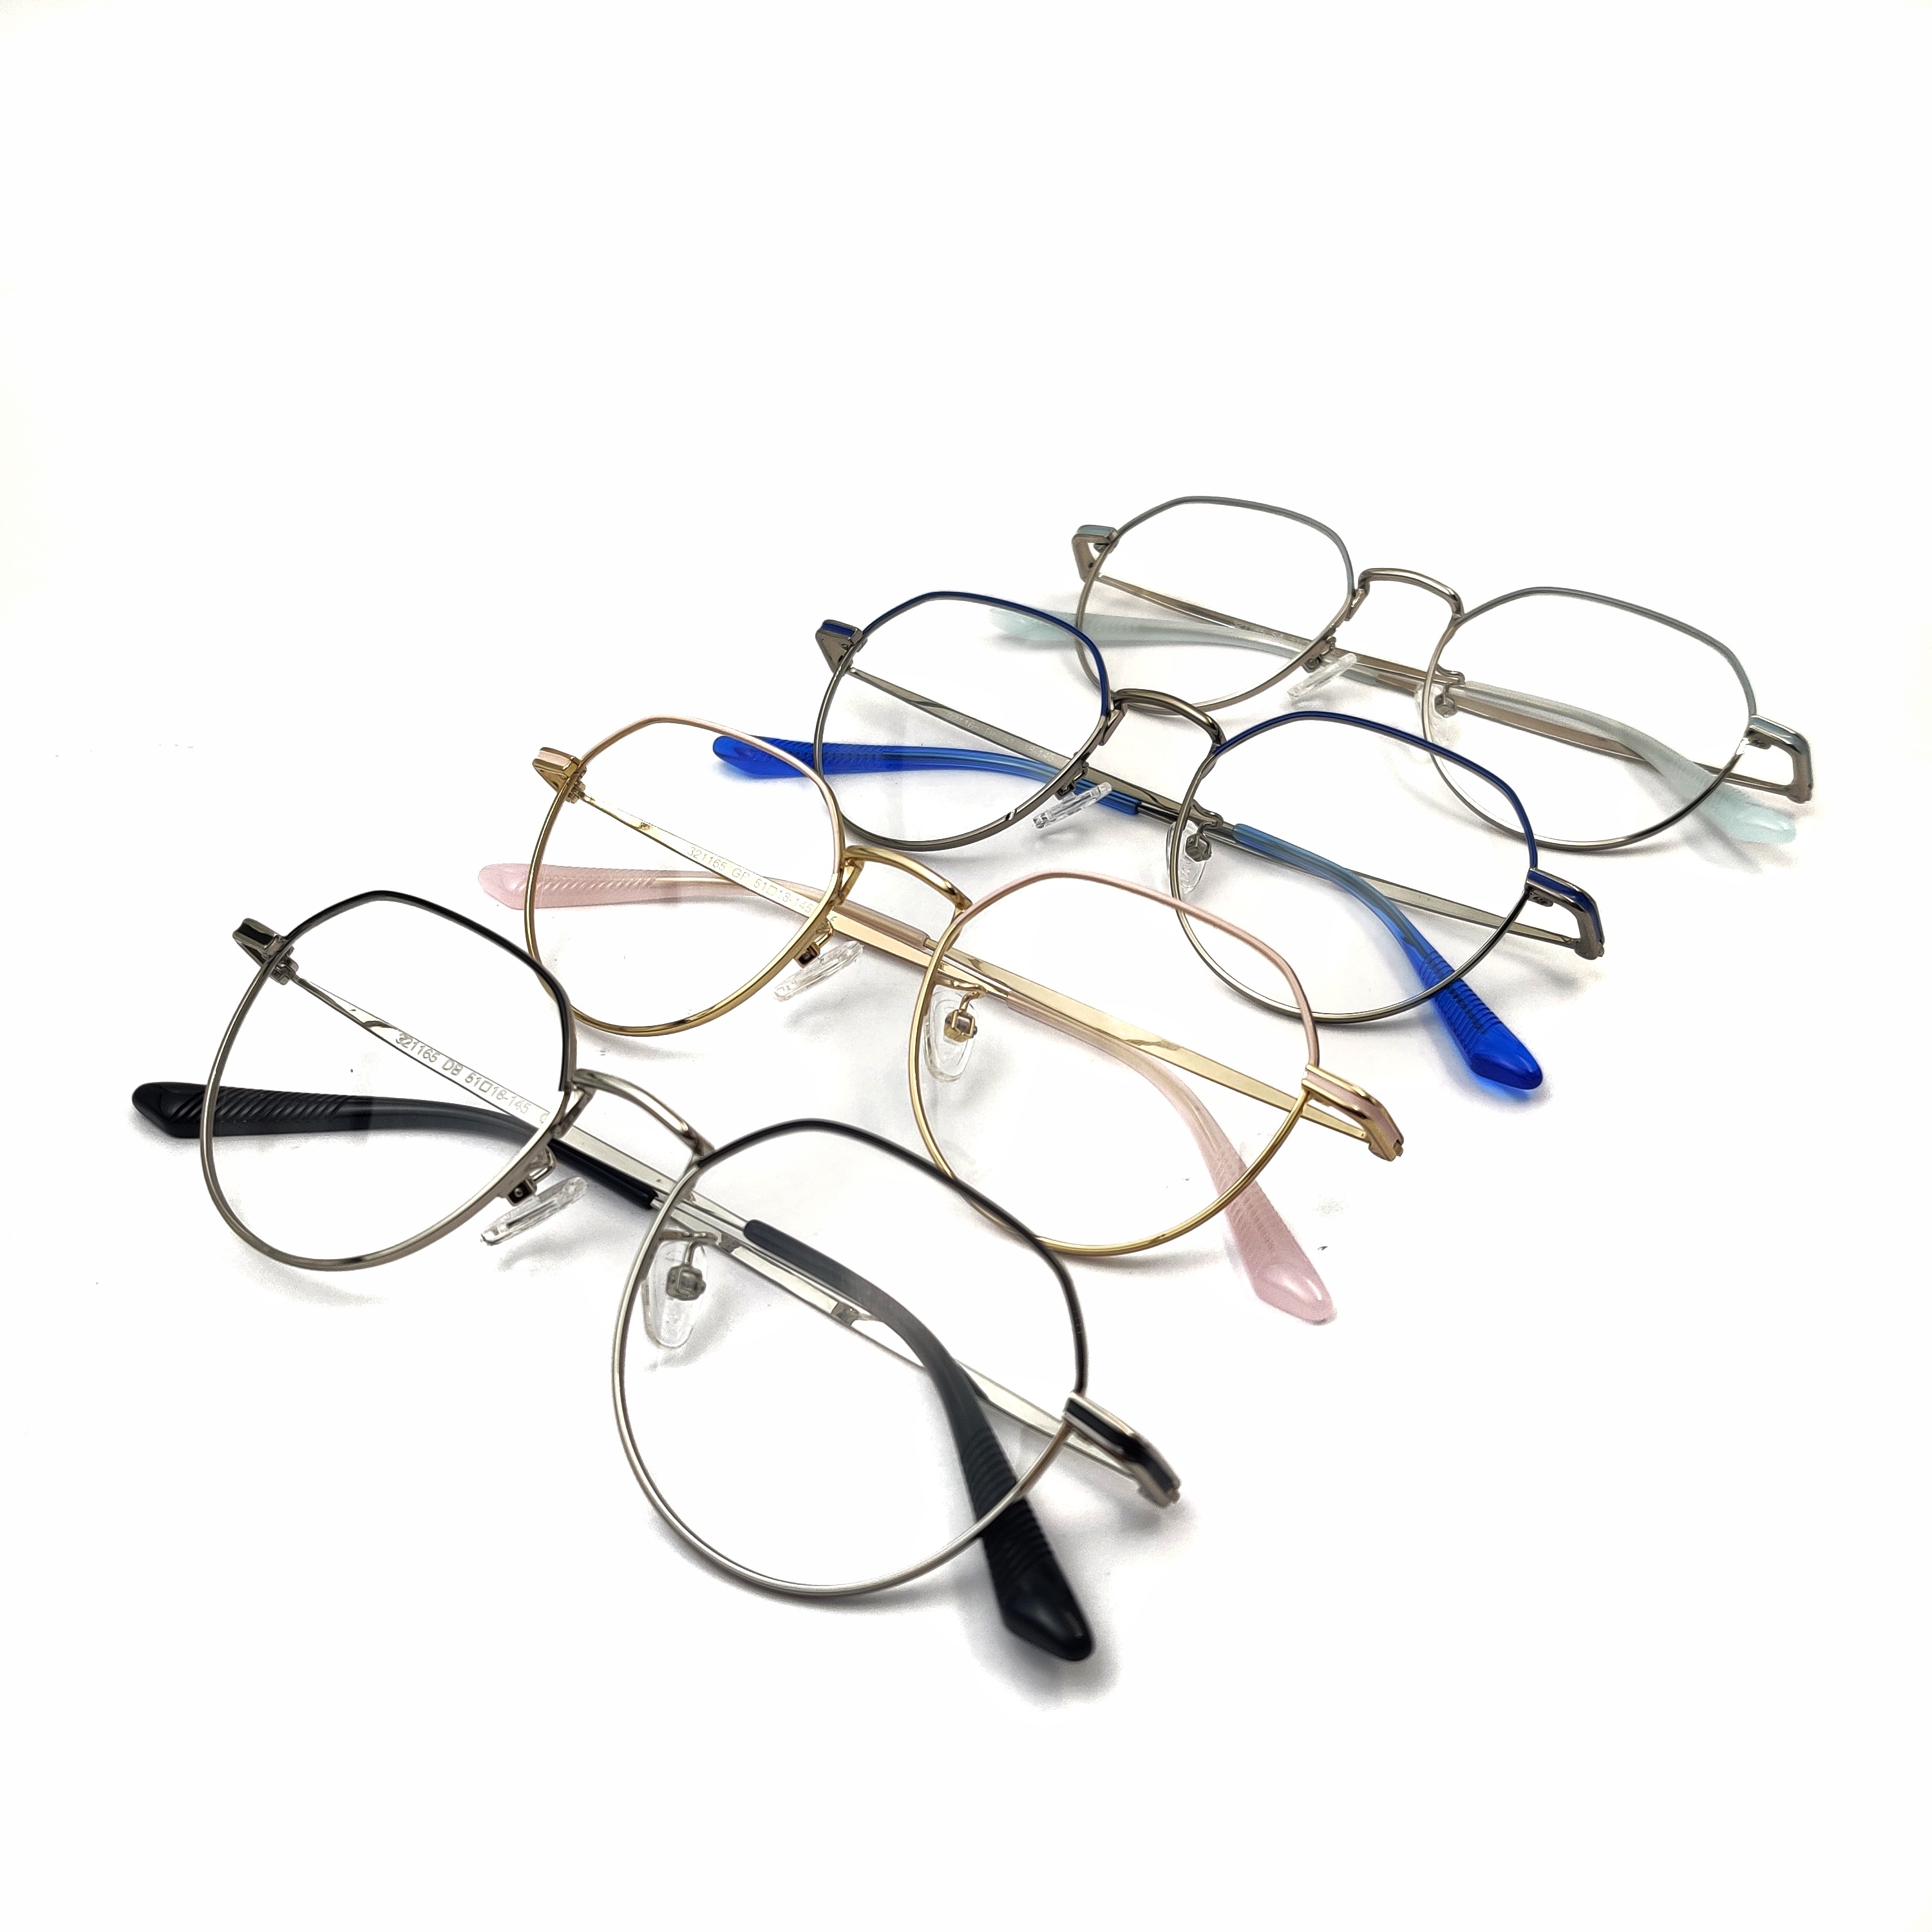 Fashion Optical Frame Full Rim Child Blocking Anti Blue Light Glasses River Kids Eyeglasses Frame Reading Study